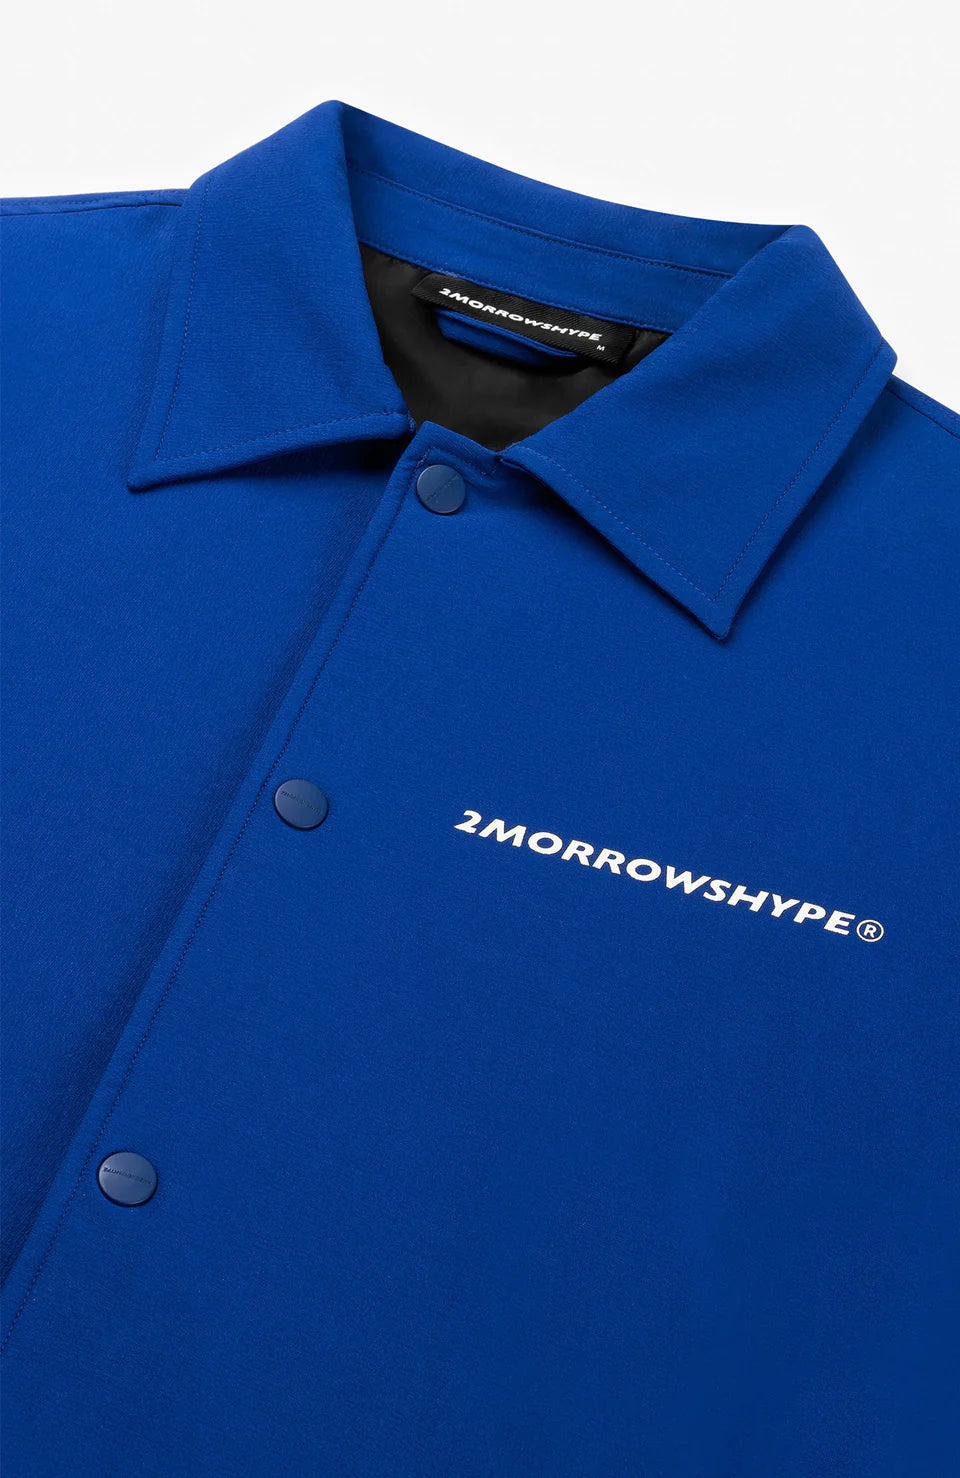 2Morrowshype Wave Coach Jacket Cobalt Blauw